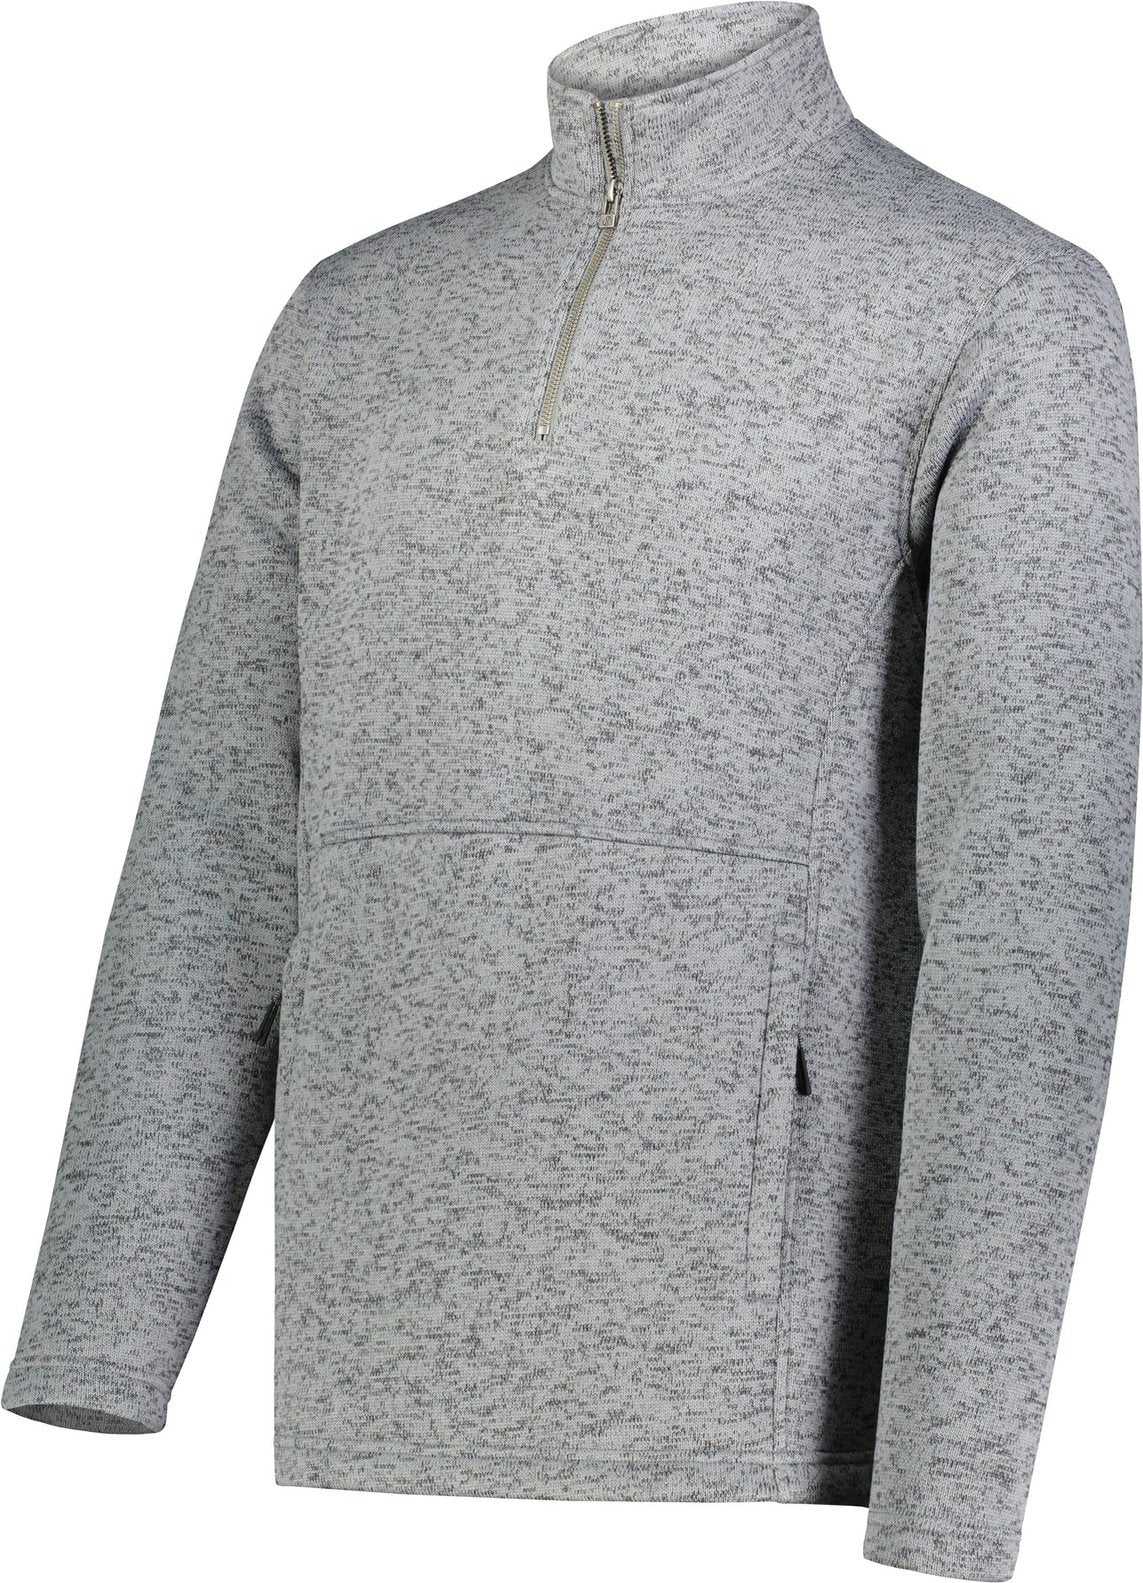 Holloway 223540 Alpine Sweater Fleece 1/4 Zip Pullover - Graphite Heather - HIT a Double